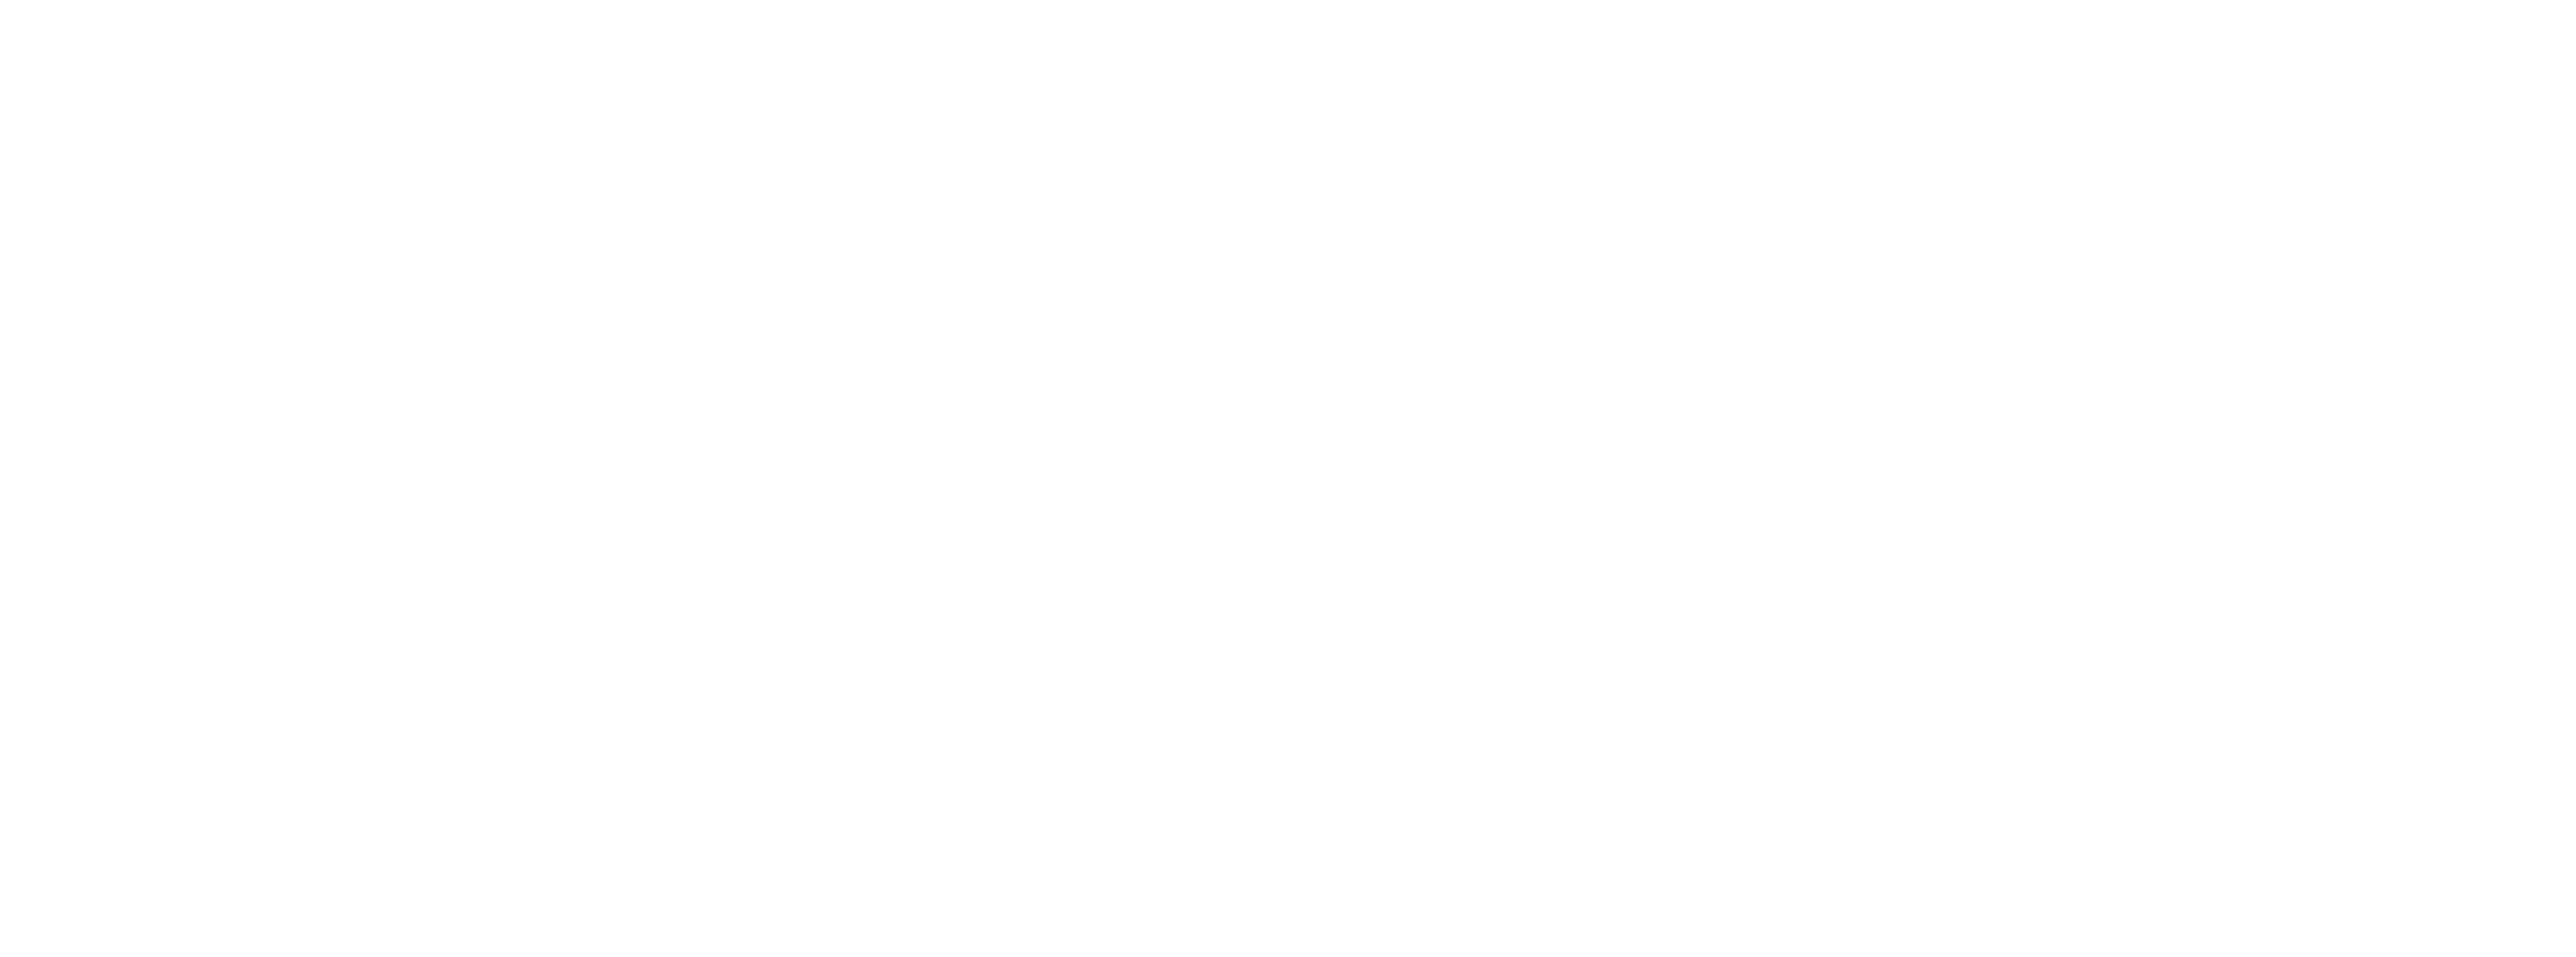 Logo Bioúguía horizontal blanco